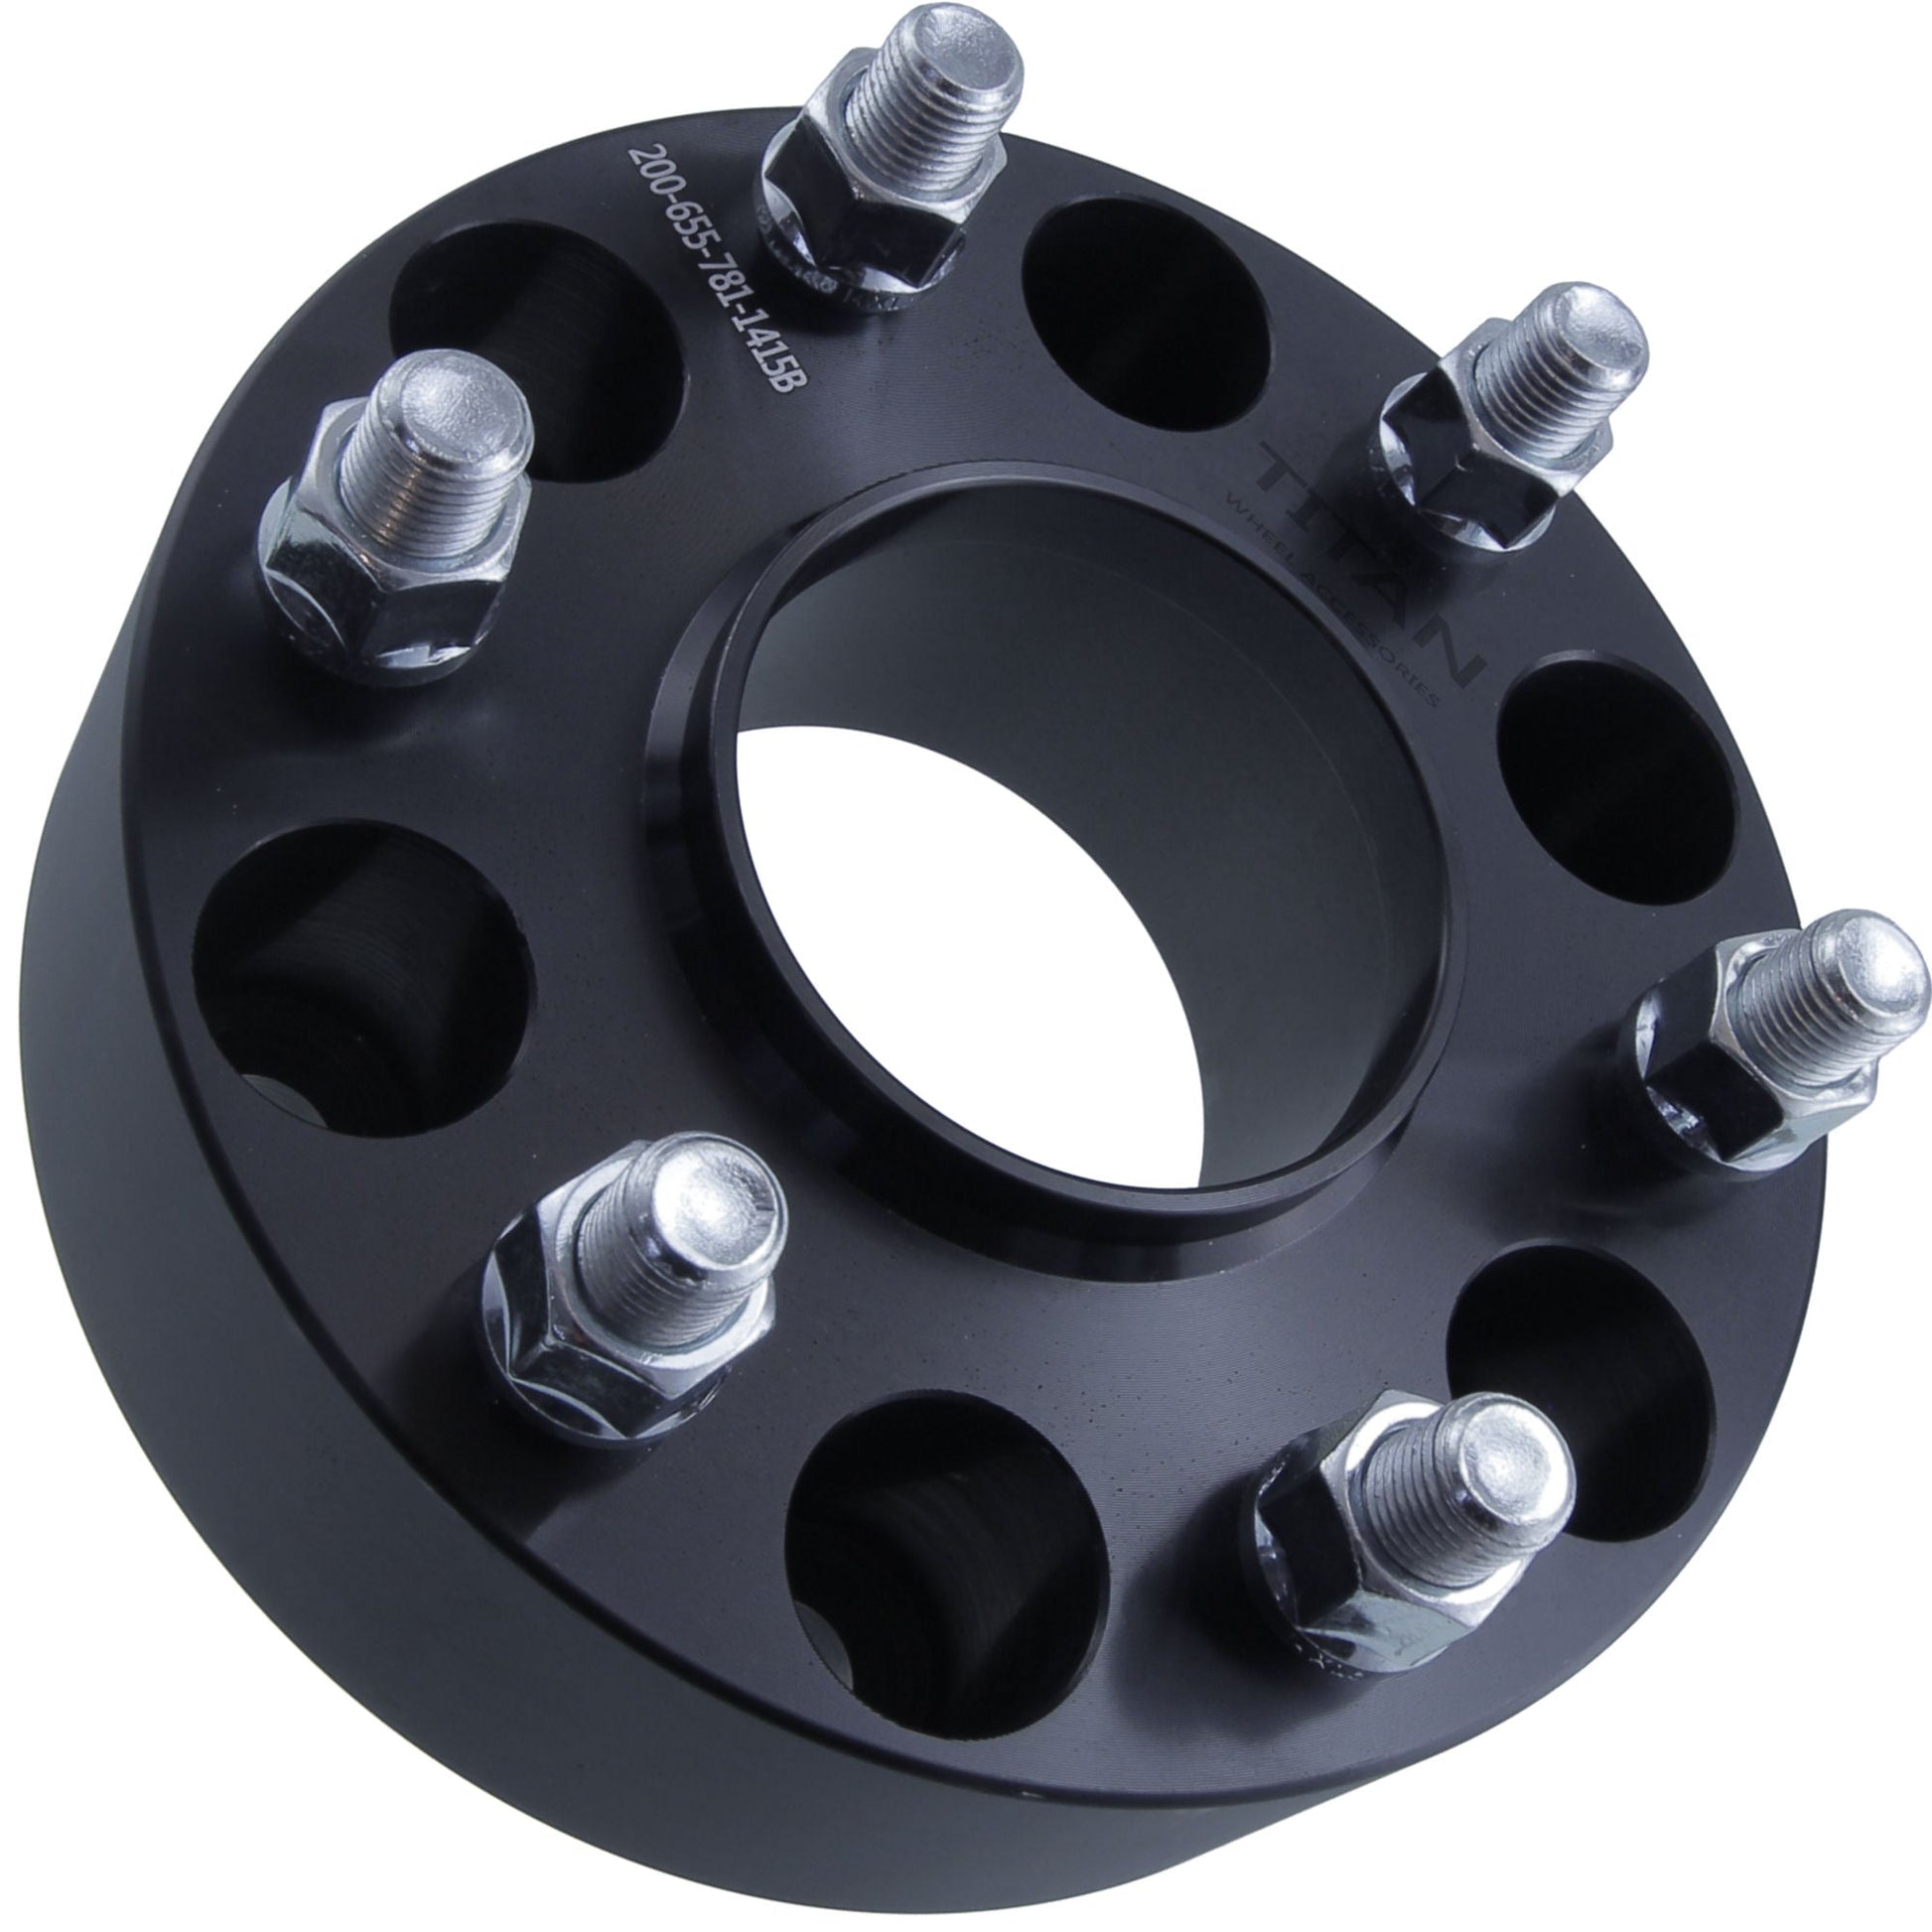 2" (50mm) Titan Wheel Spacers for GMC Sierra Yukon | 6x5.5 (6x139.7) | 78.1 Hubcentric |14x1.5 Studs | Titan Wheel Accessories